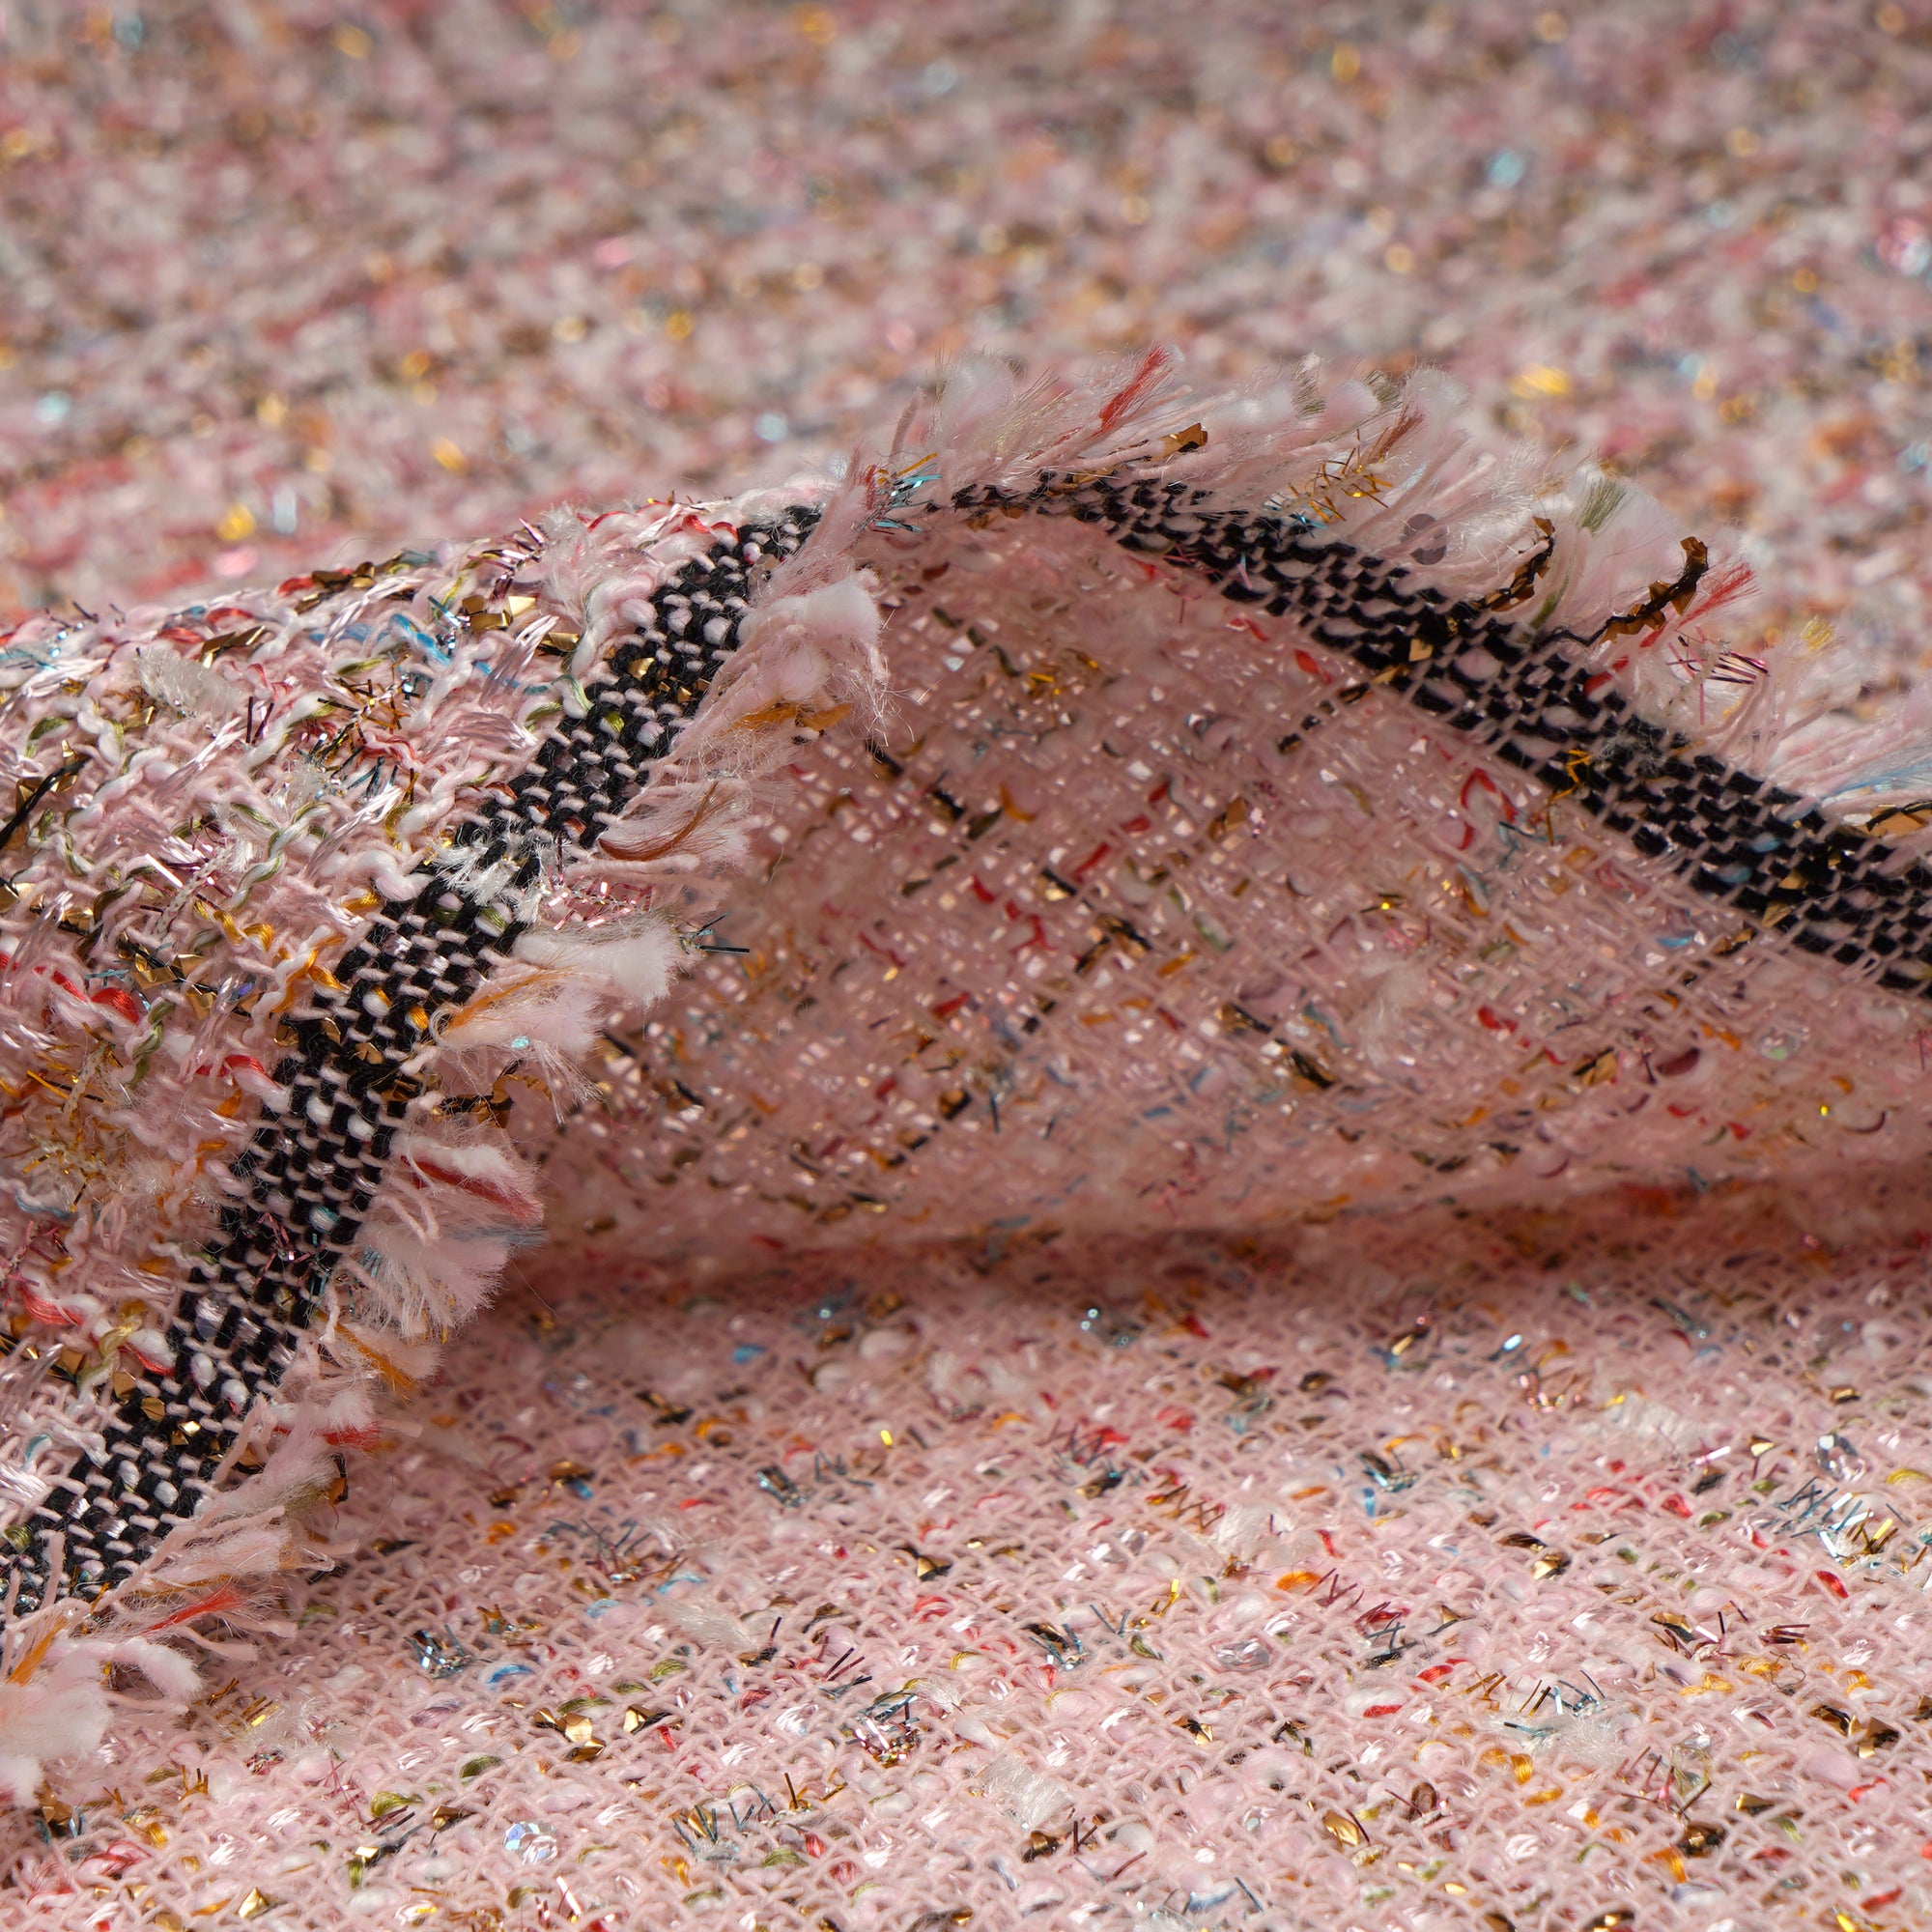 Baby Pink Premium Metallic Tweed Fabric (60" Width)